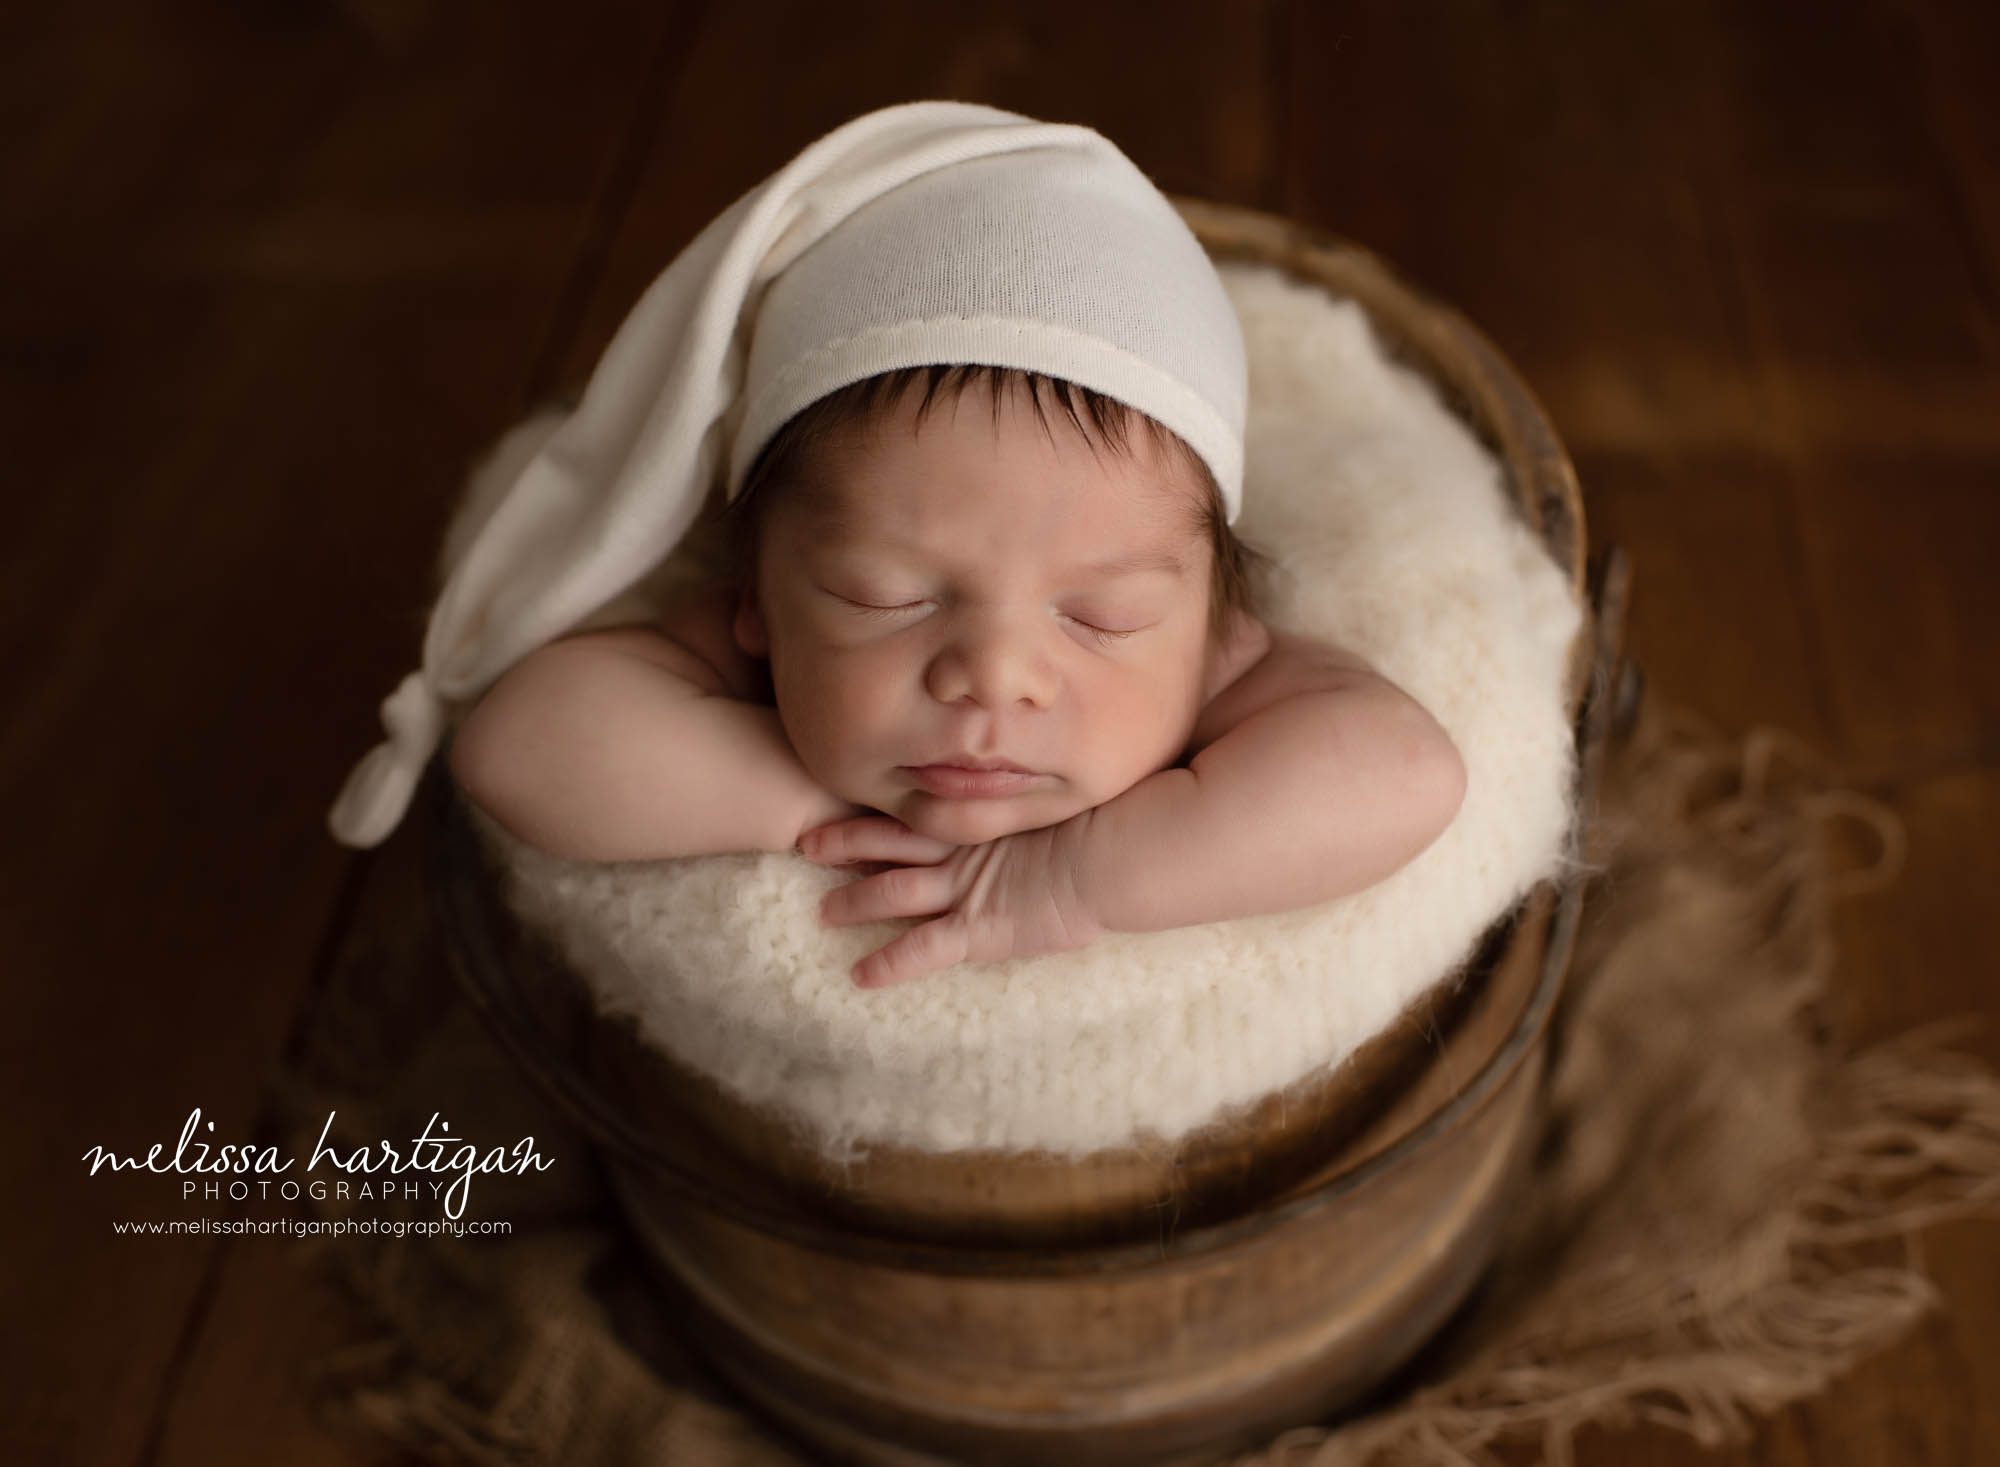 newborn baby boy posed in bucket wearing cream sleepy cap